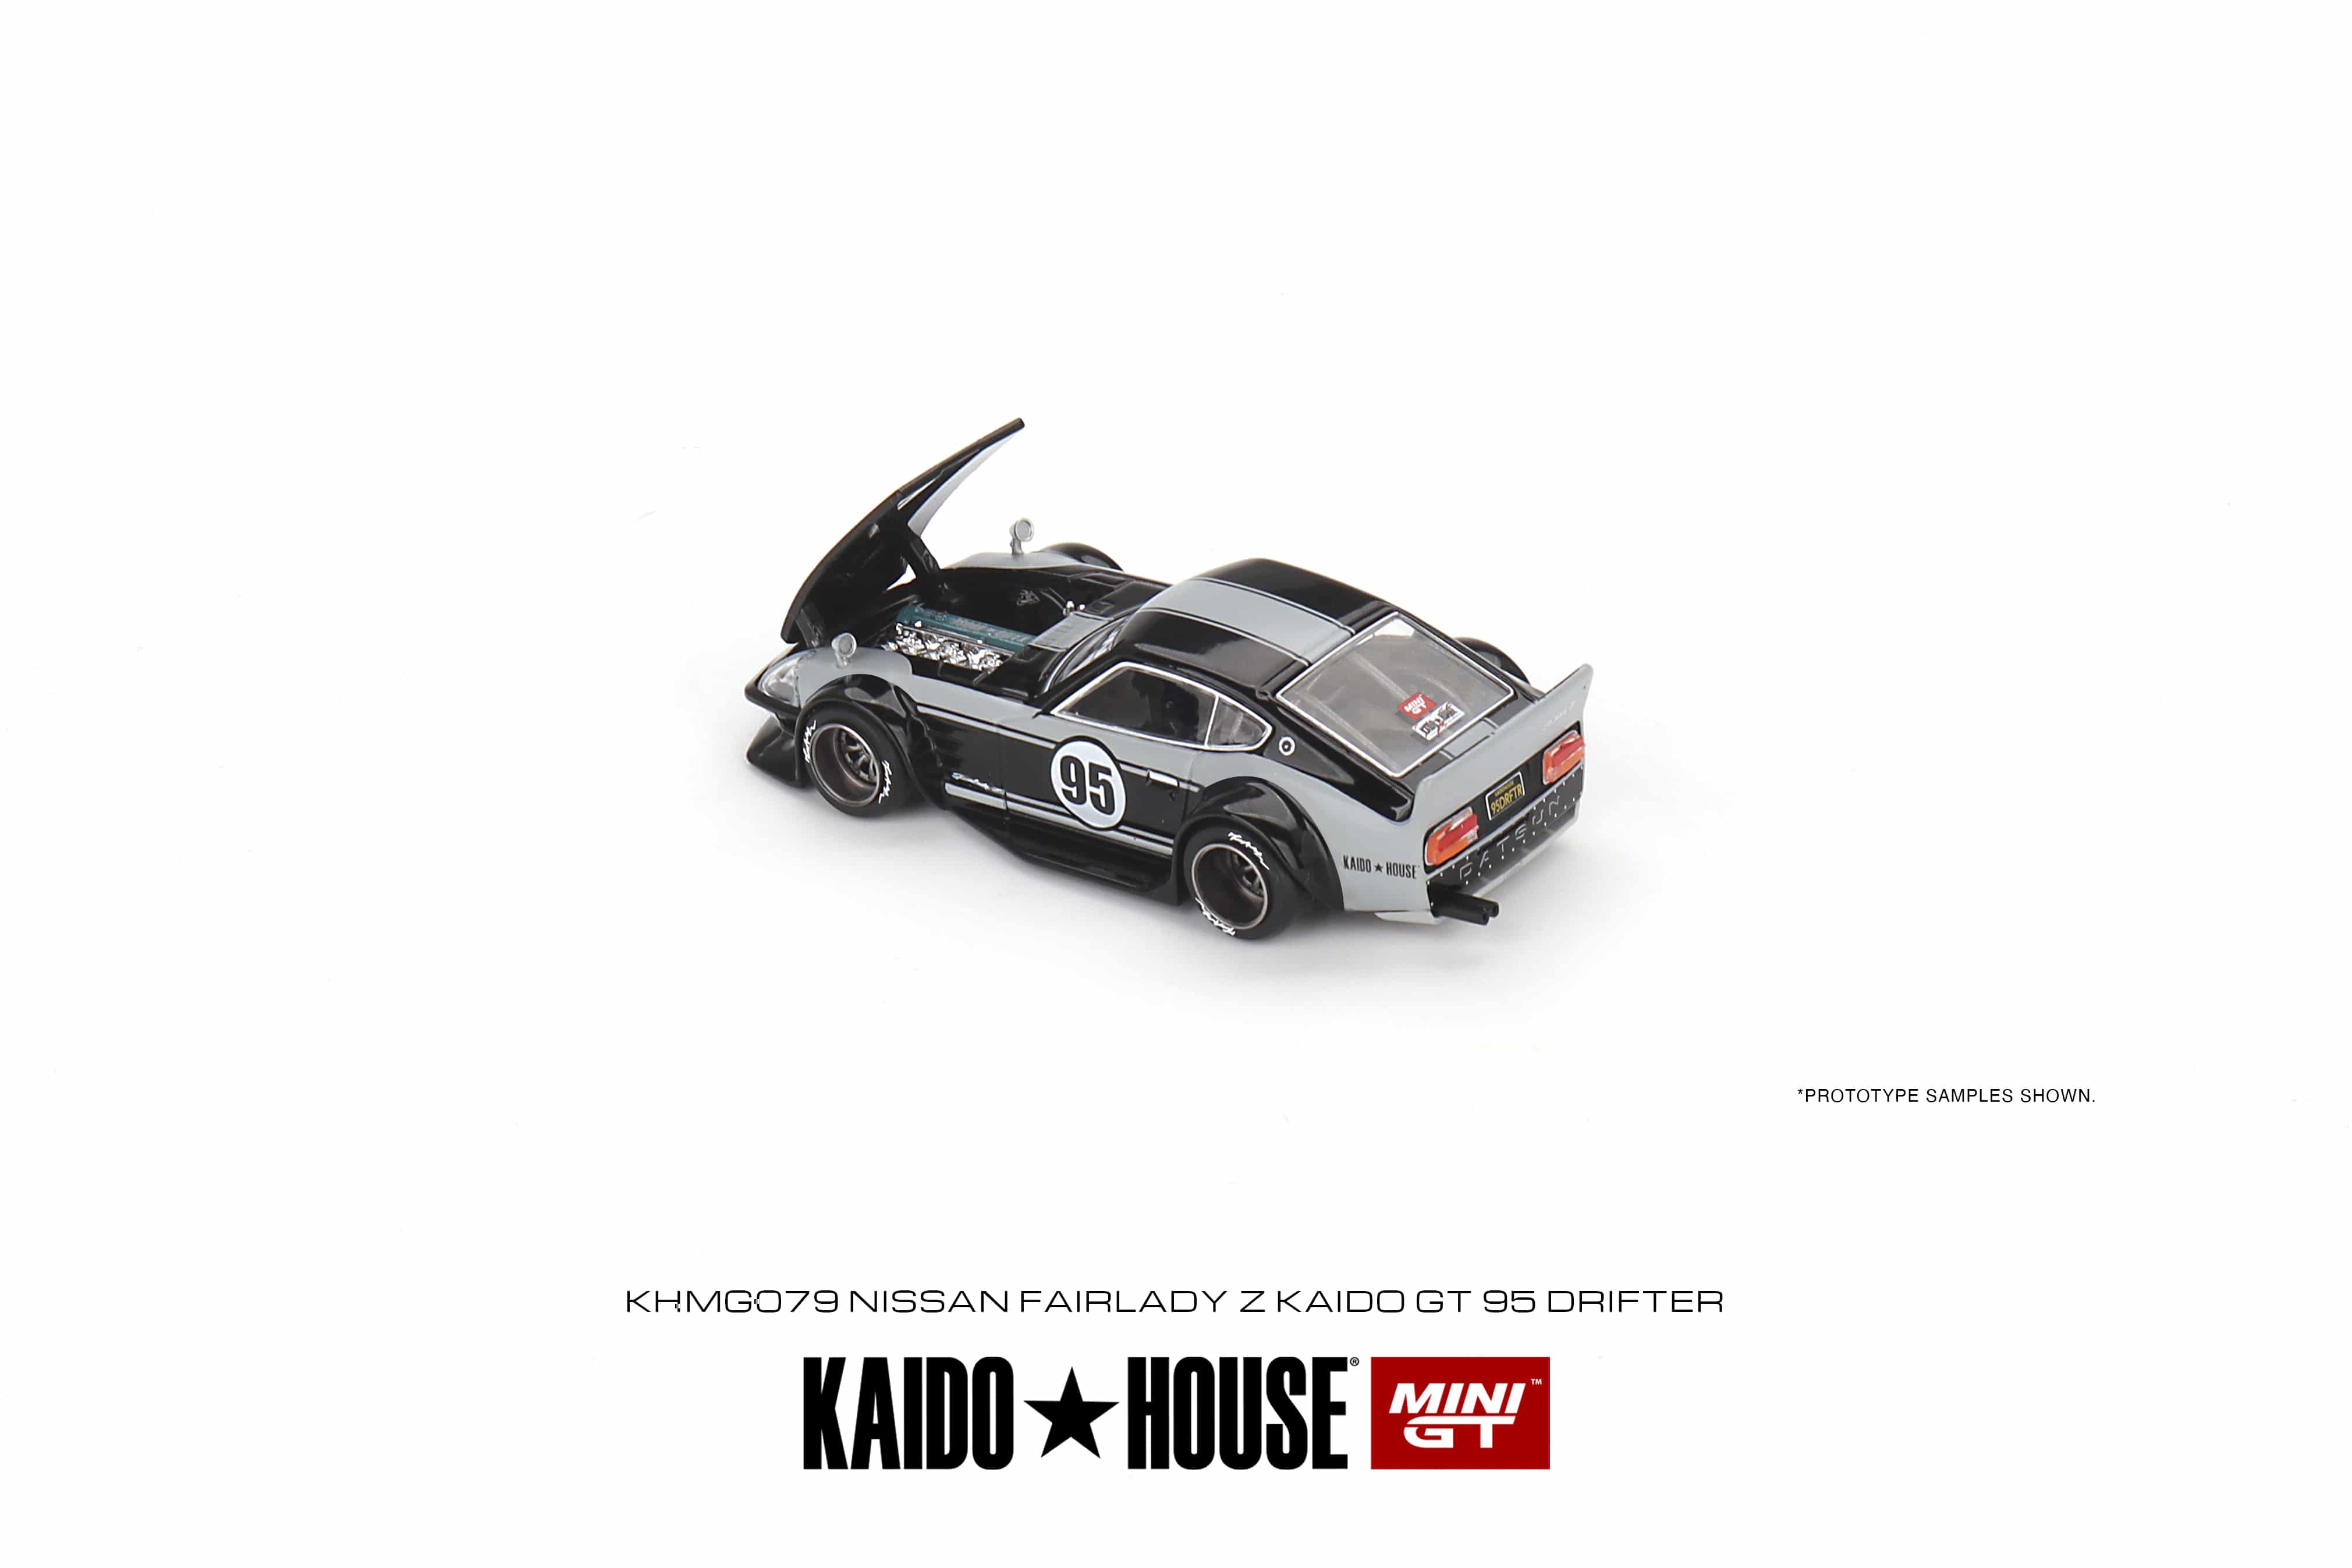 MINI GT KaidoHouse x MINI GT Nissan Fairlady Z Kaido GT 95 Drifter 